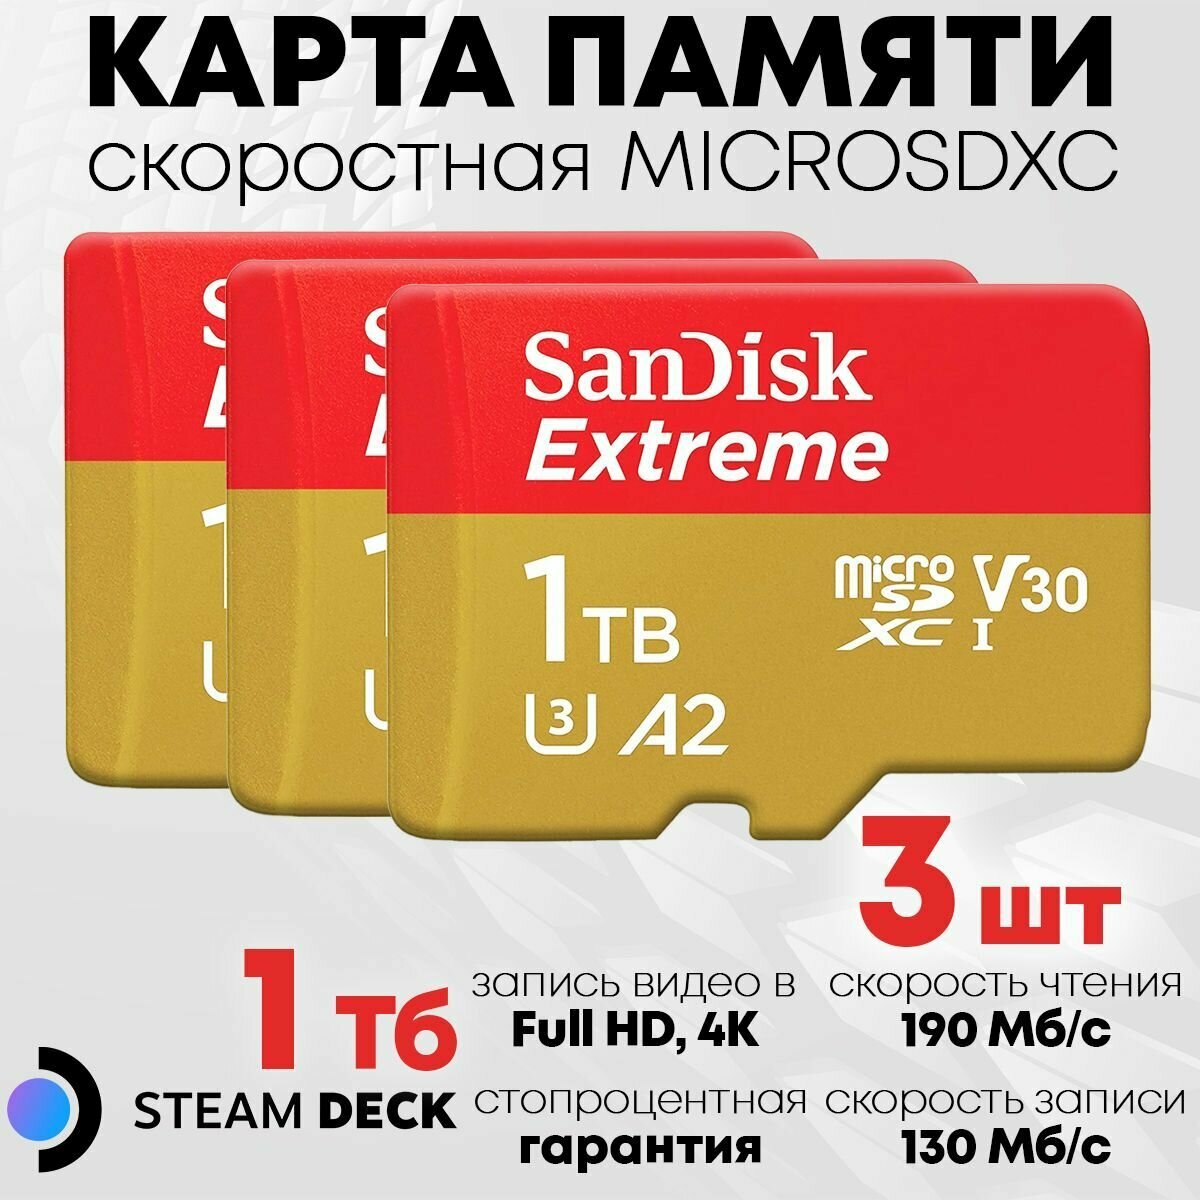 Карта памяти SanDisk MicroSDXC 1 TB Extreme (SDSQXA1-1T00-GN6MA) 3 ШТ - steam deck micro sd 1 Тб